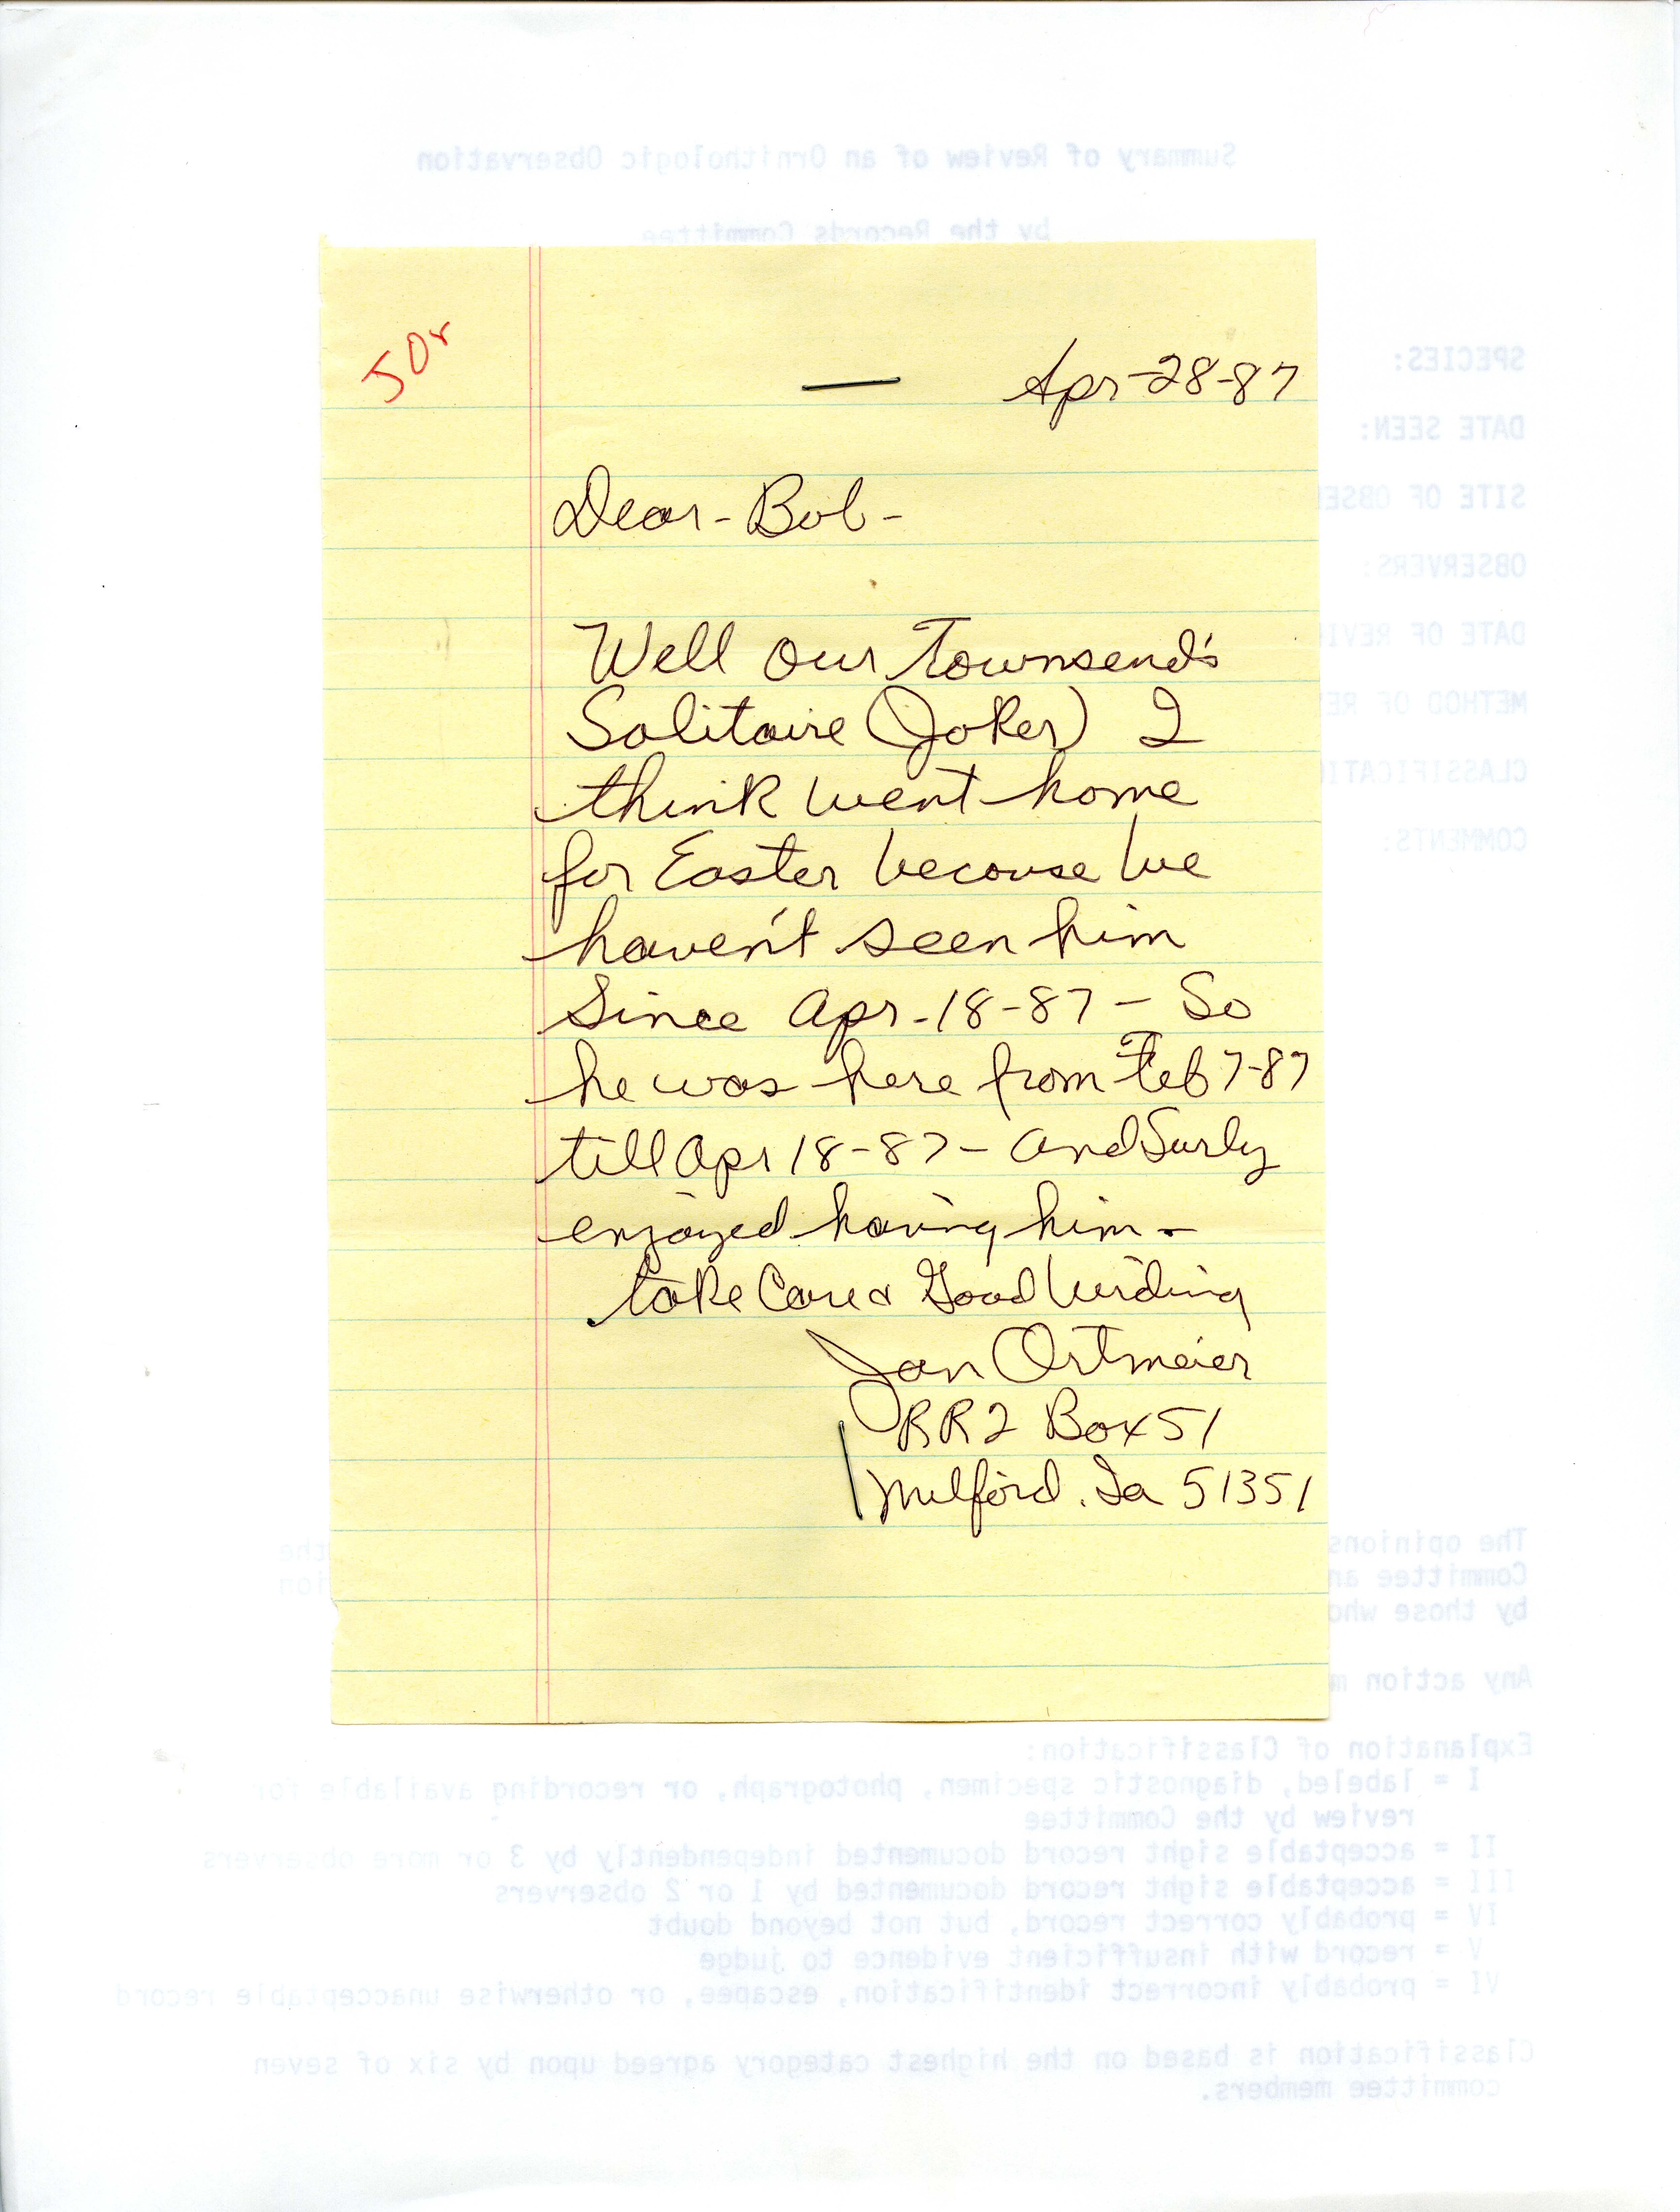 Jan Ortmeier letter to Robert K. Myers regarding a single bird sighting, April 28, 1987